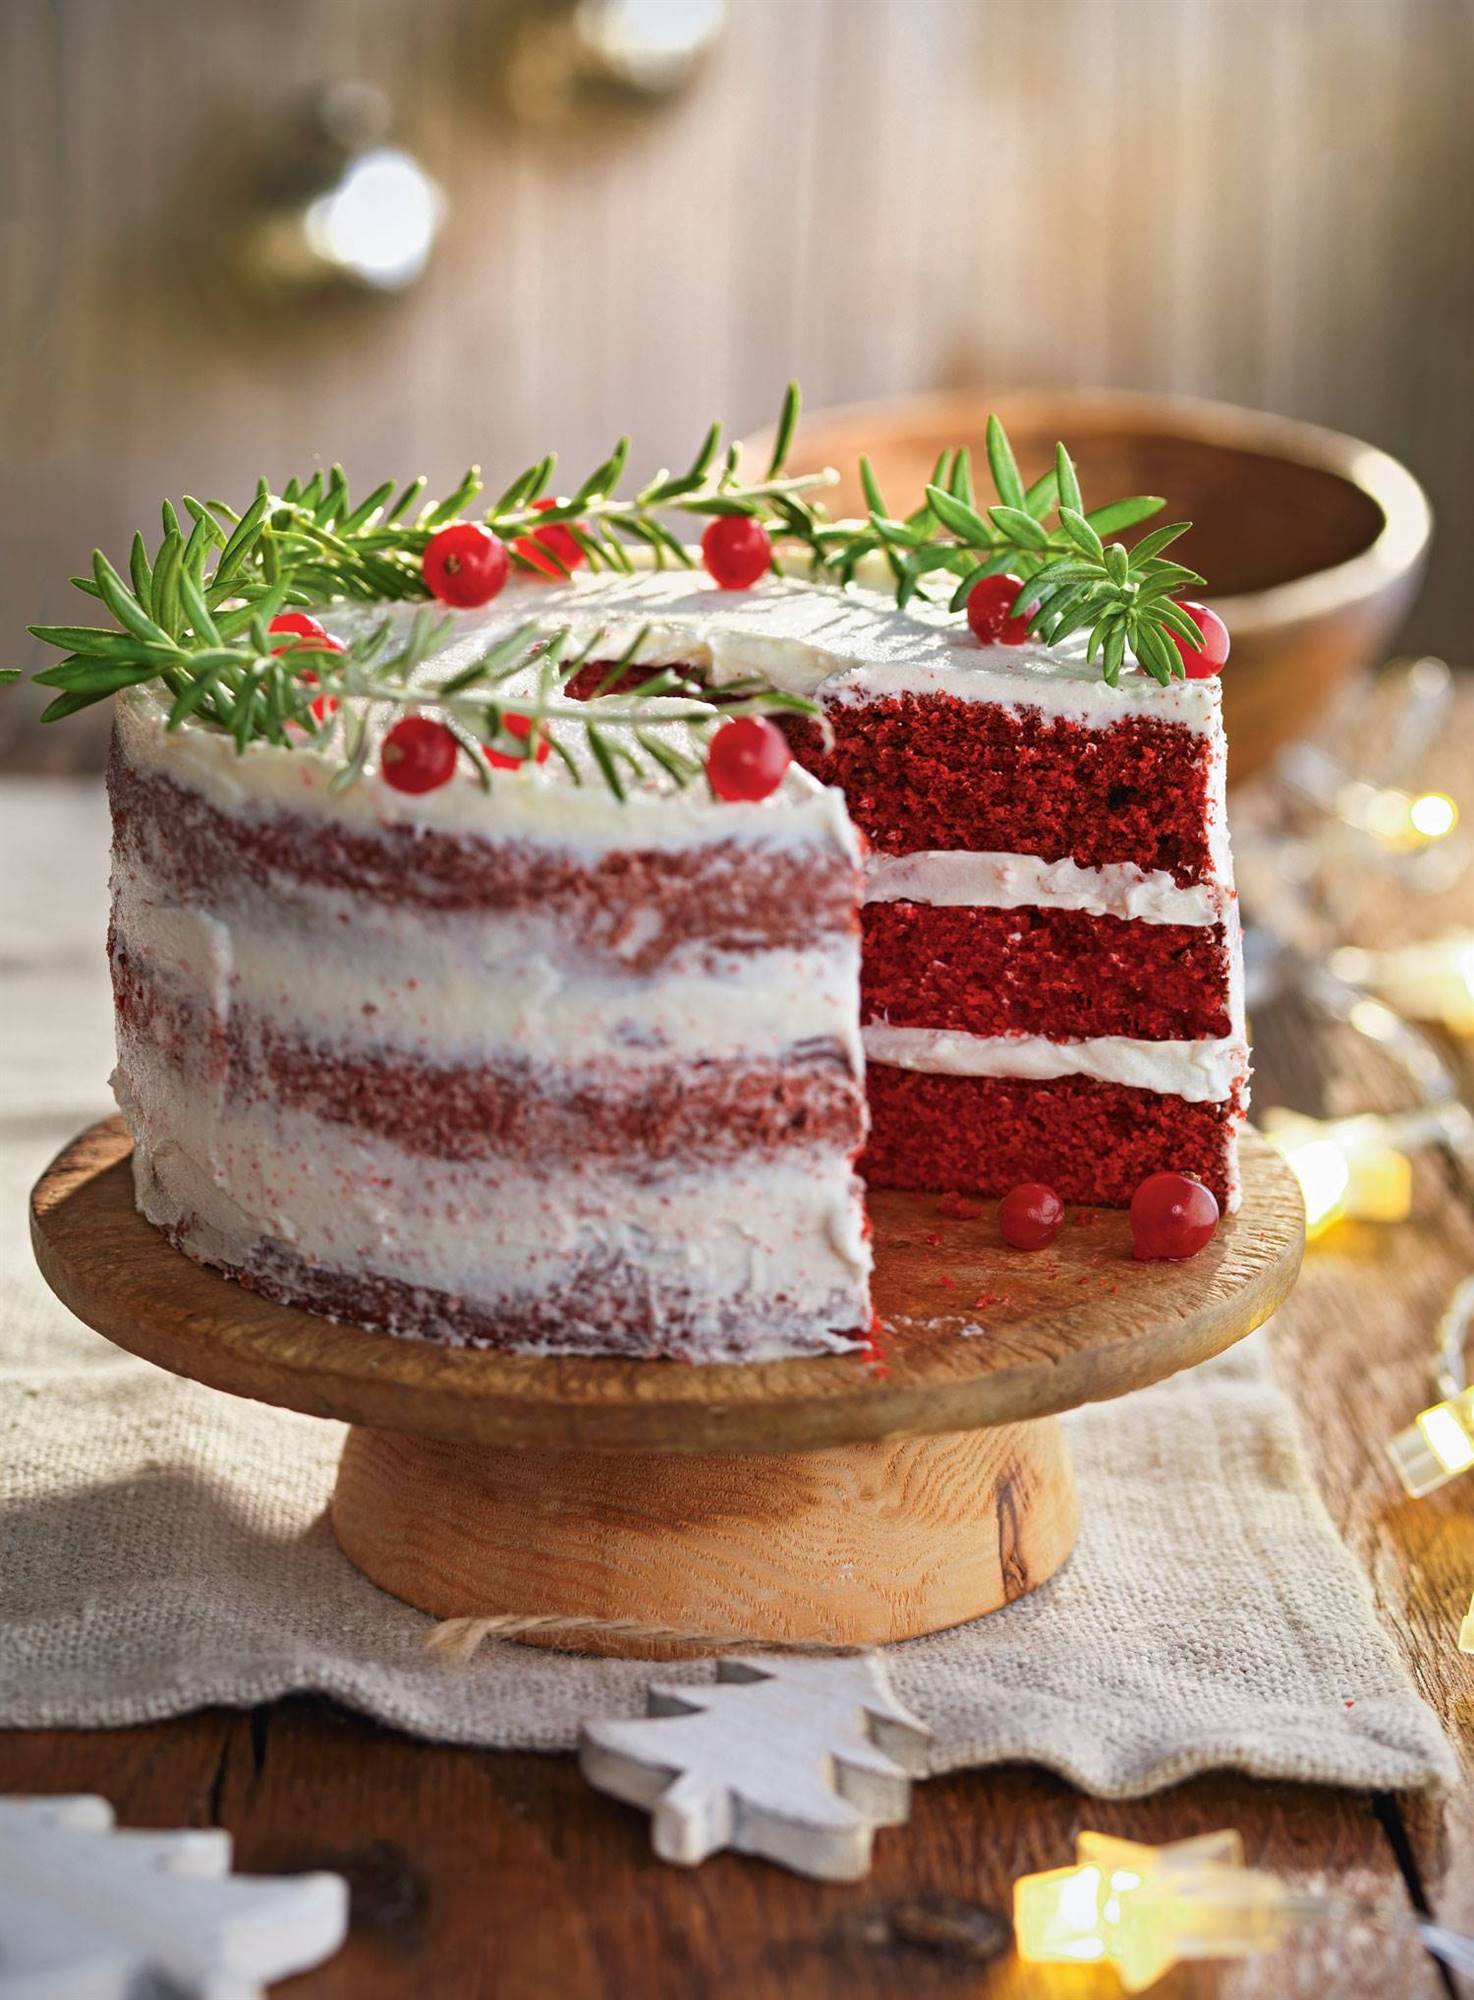 Menú de Navidad, postre: tarta red velvet con merengue y grosella.